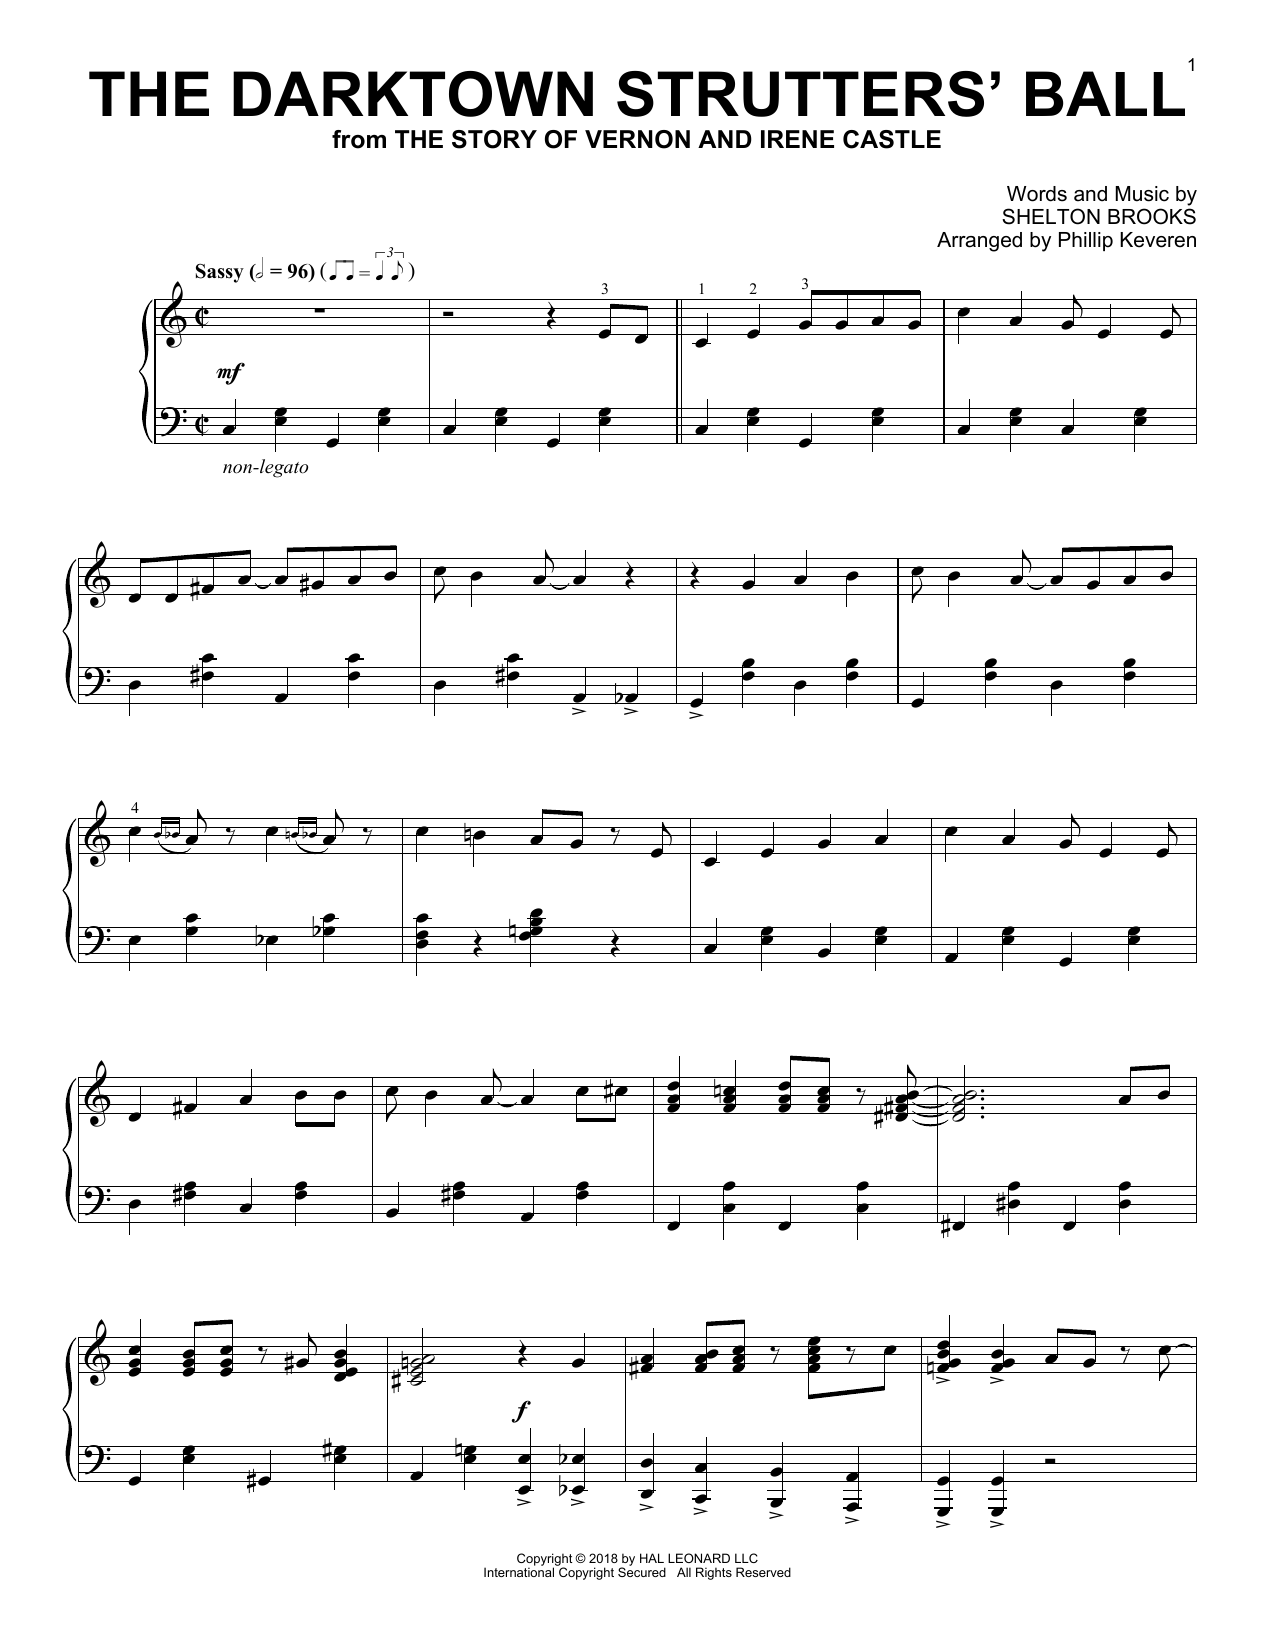 Shelton Brooks The Darktown Strutters' Ball [Jazz version] (arr. Phillip Keveren) Sheet Music Notes & Chords for Piano - Download or Print PDF